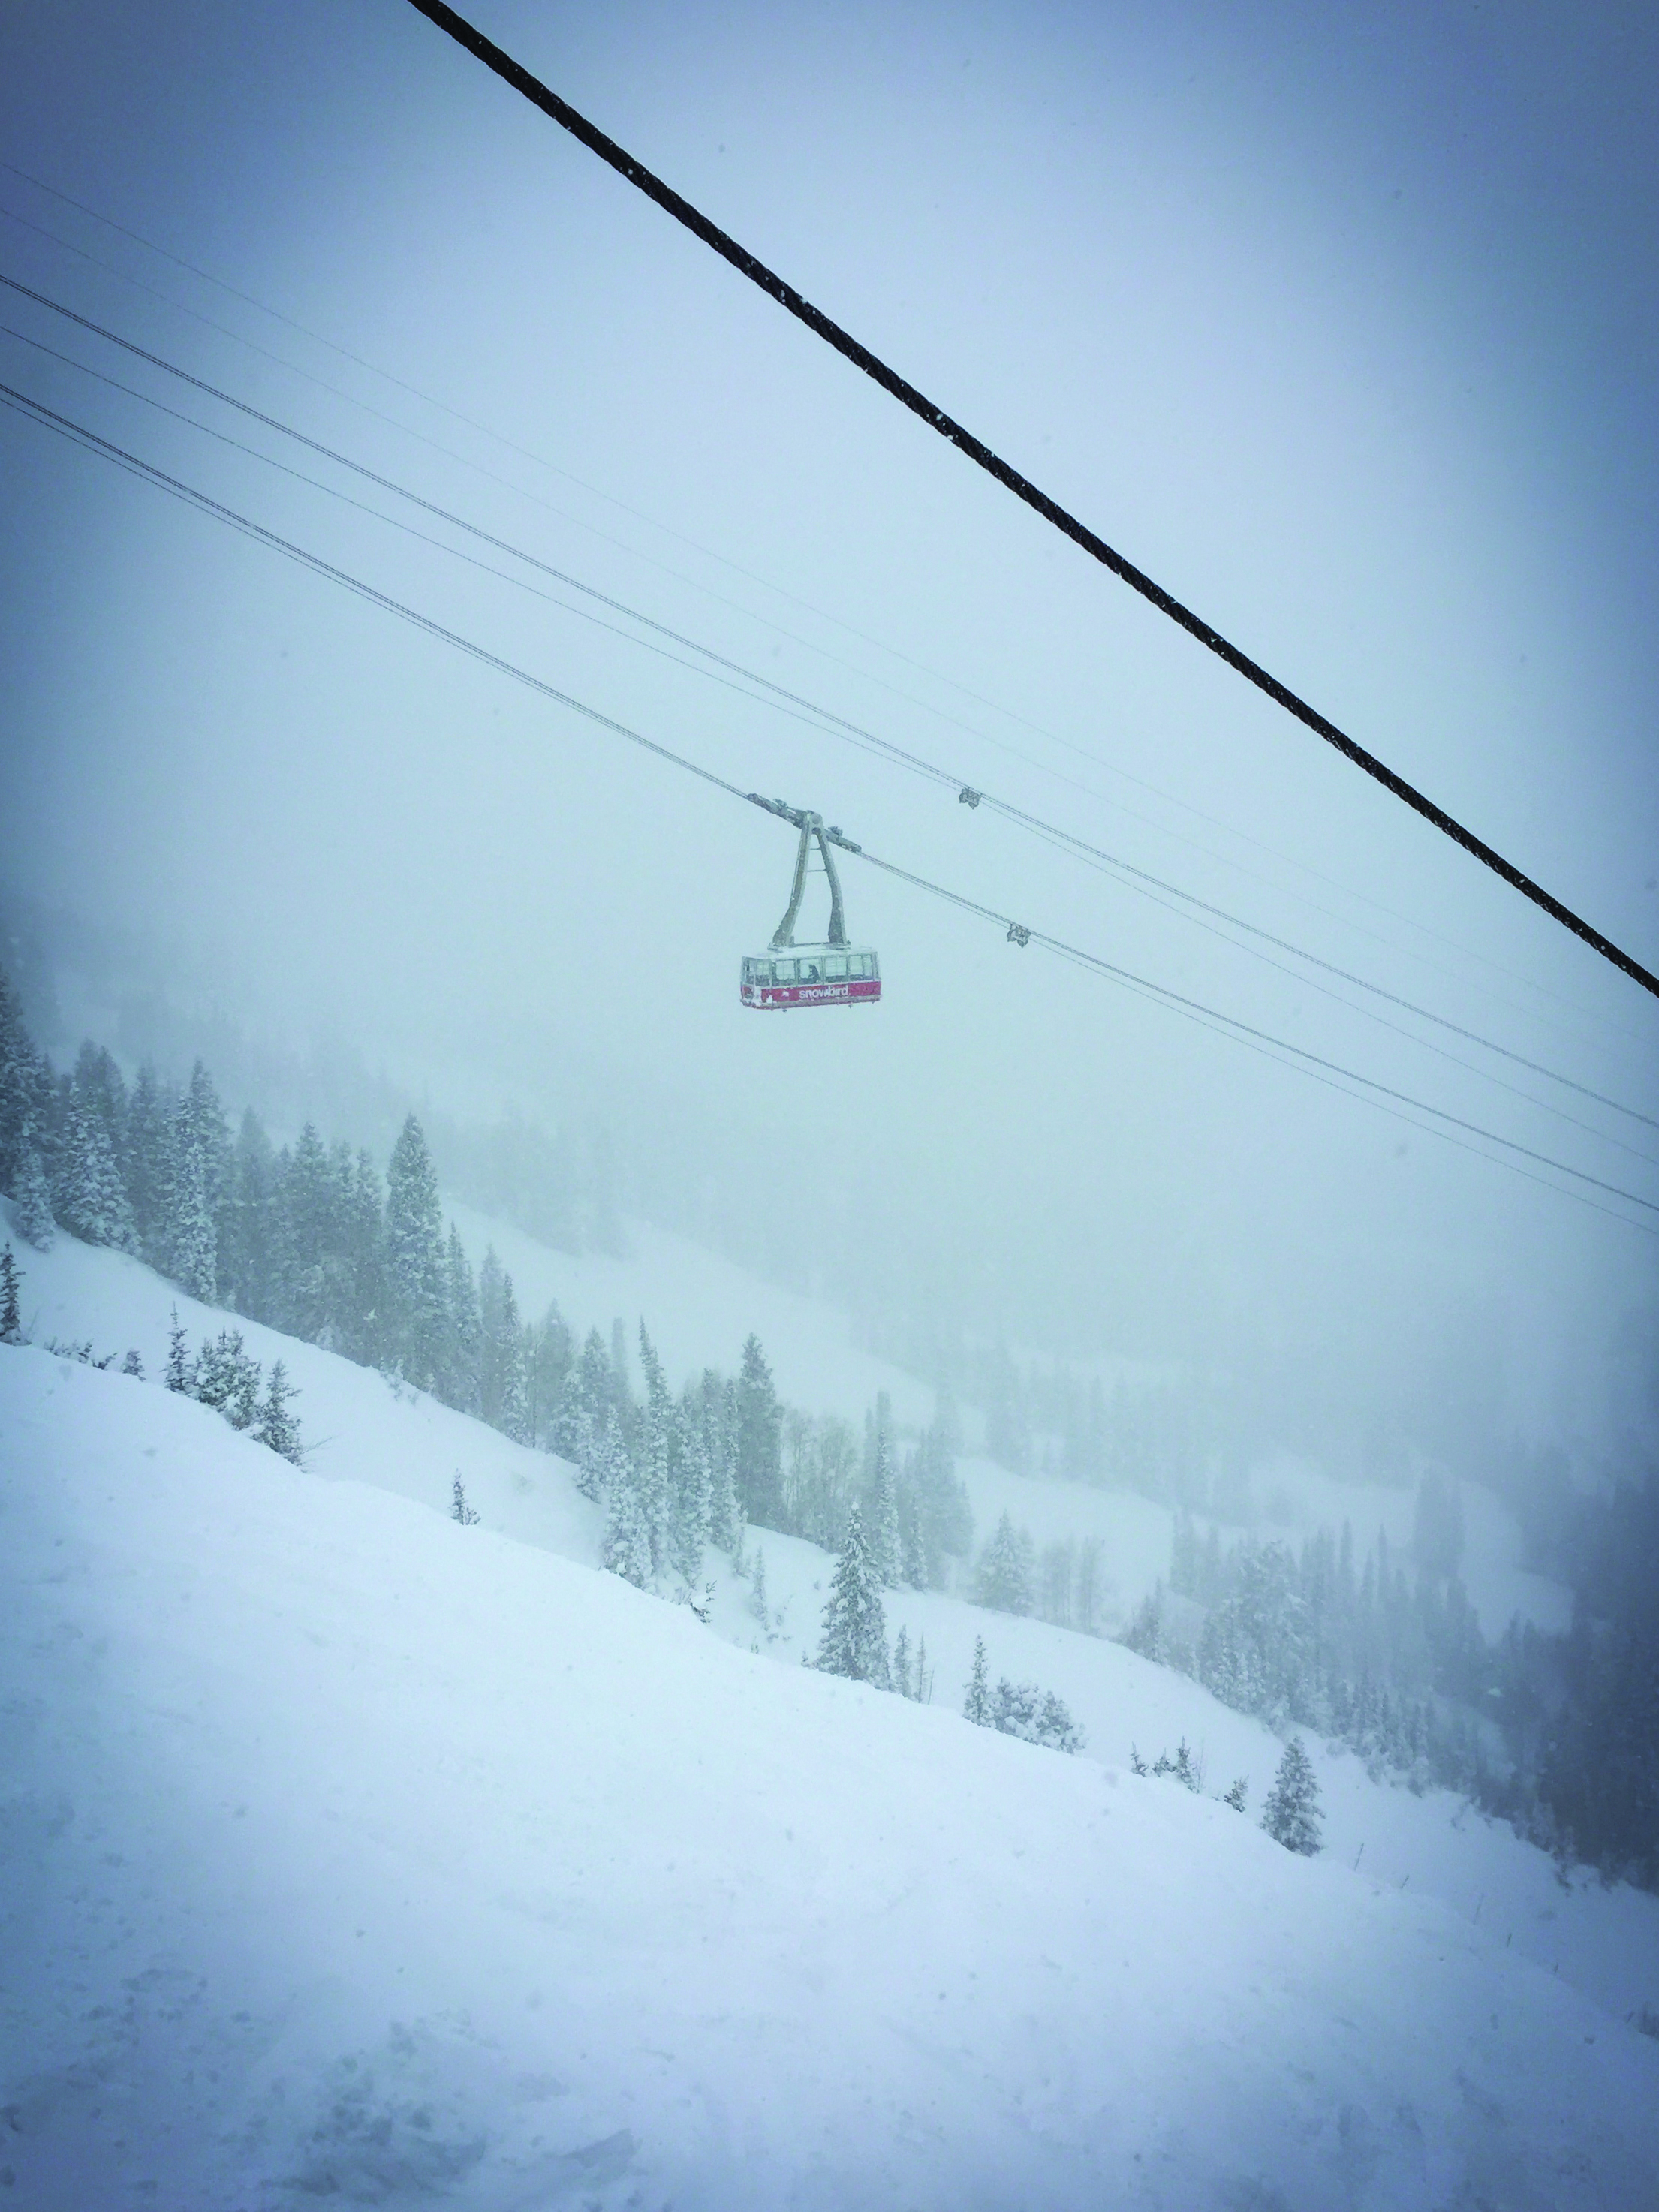   The aerial tram at Snowbird Ski Resort glides past on a powder day. Photo Neill Pieper  